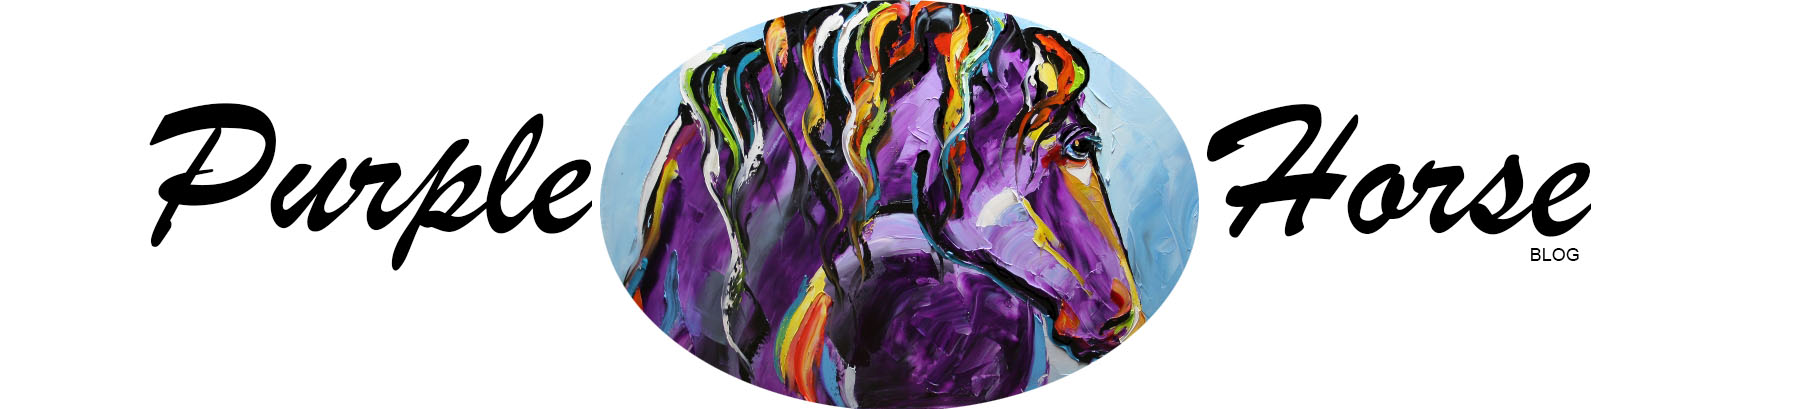 purplehorse.blog